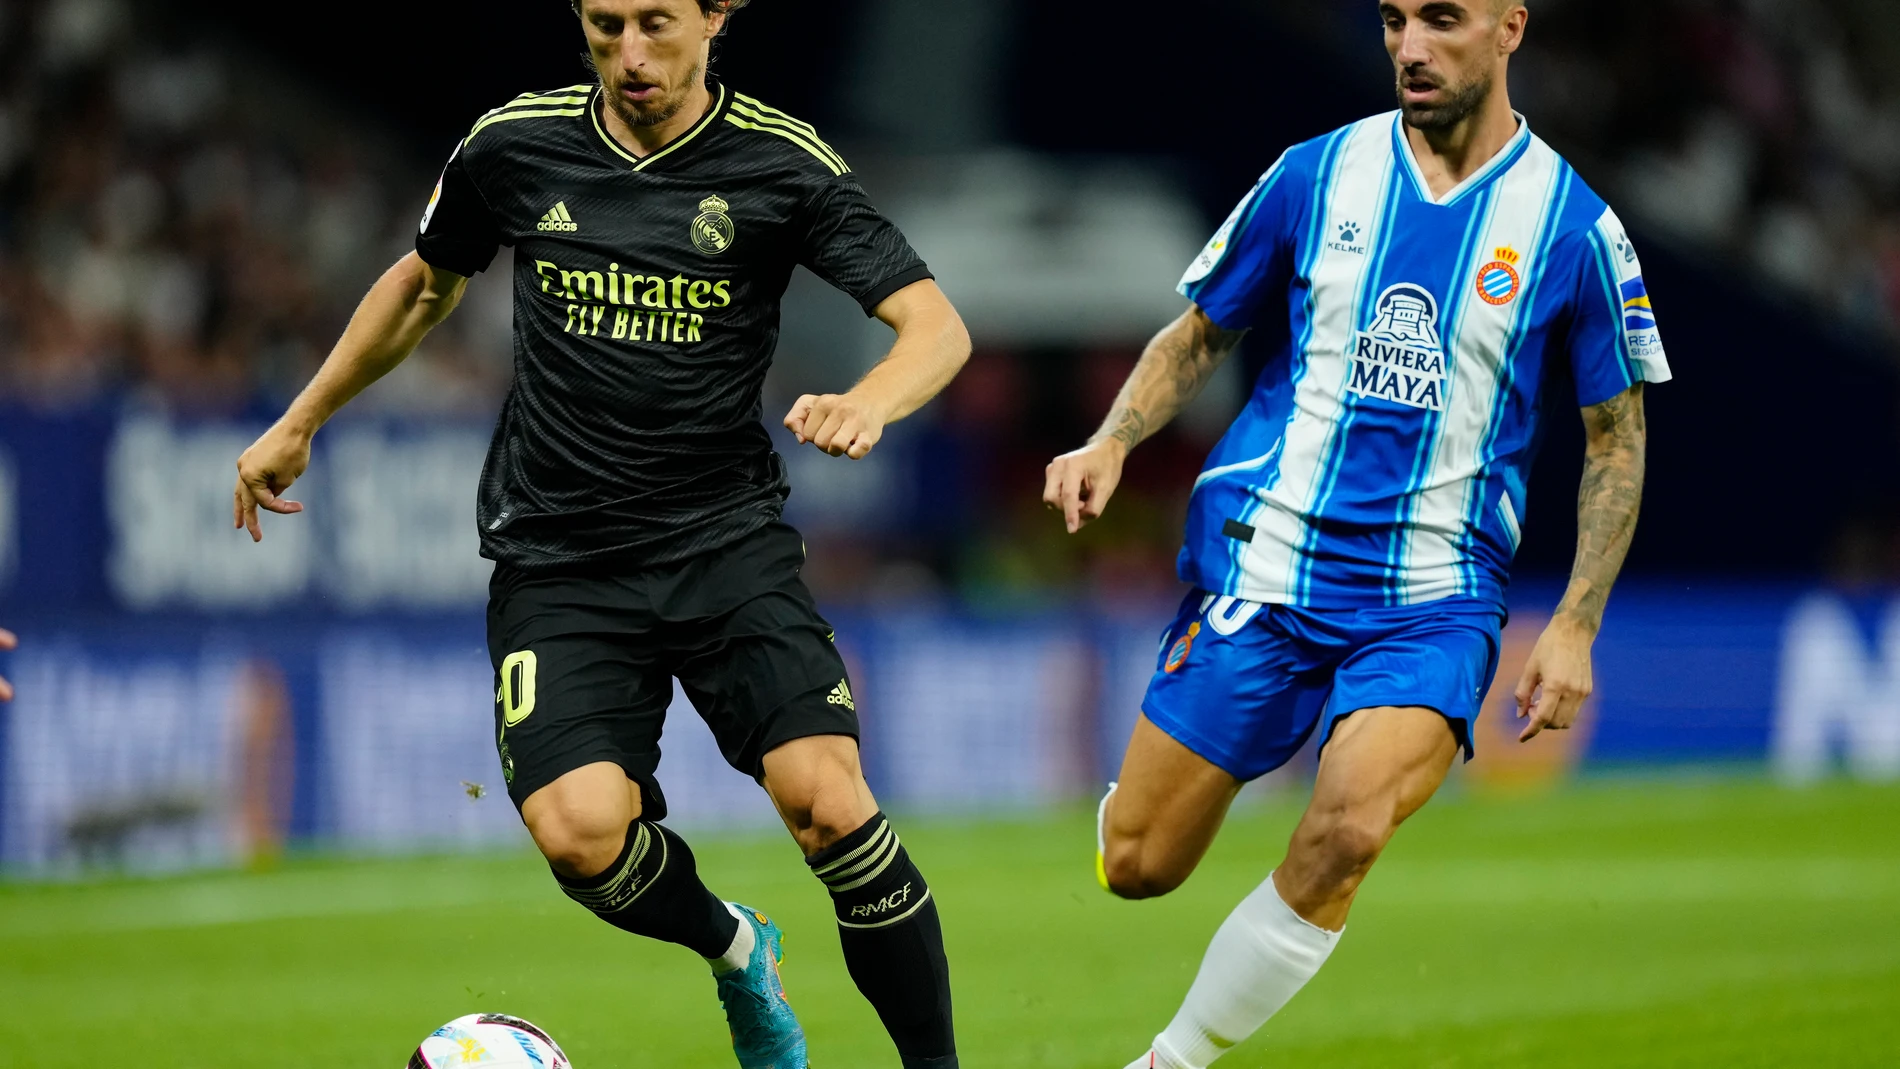 El centrocampista del Real Madrid Luka Modric (i) se escapa de Sergi Darder, del RCD Espanyol, durante el partido de la tercera jornada de LaLiga que RCD Espanyol y REal Madrid juegan hoy domingo en el RCDE Stadium. EFE/Enric Fontcuberta